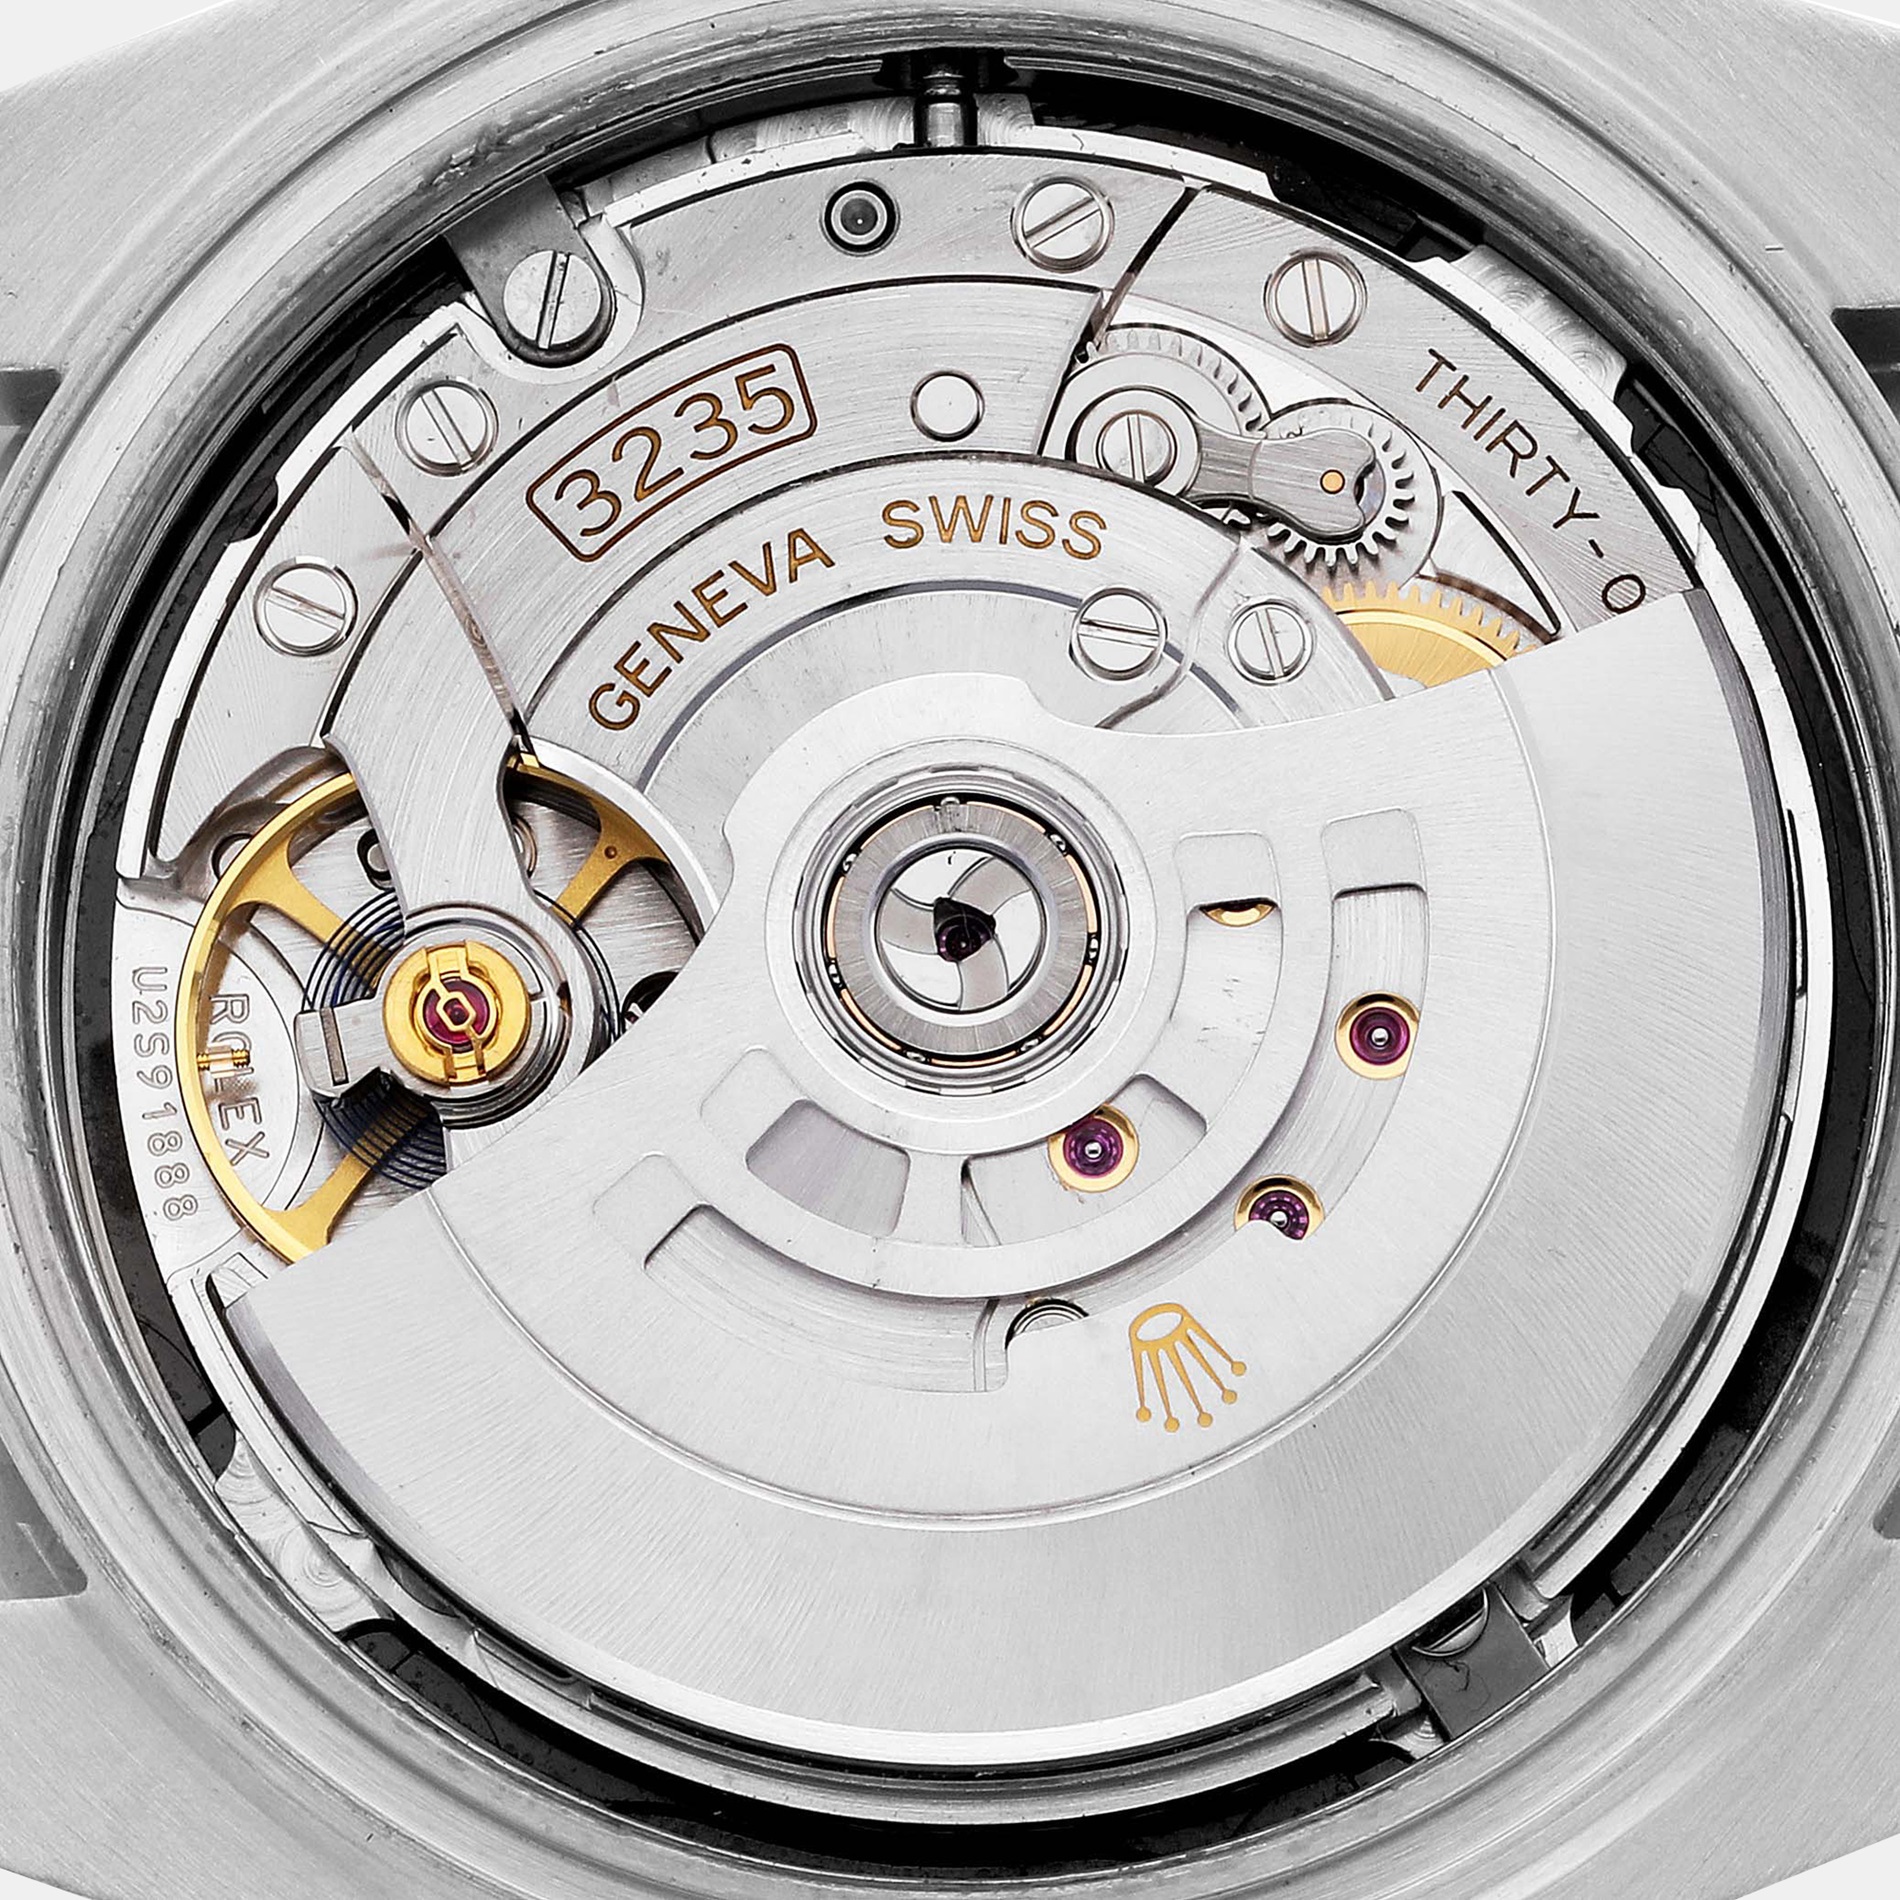 Rolex Datejust Steel White Gold Black Diamond Dial Men's Watch 126334 41 Mm